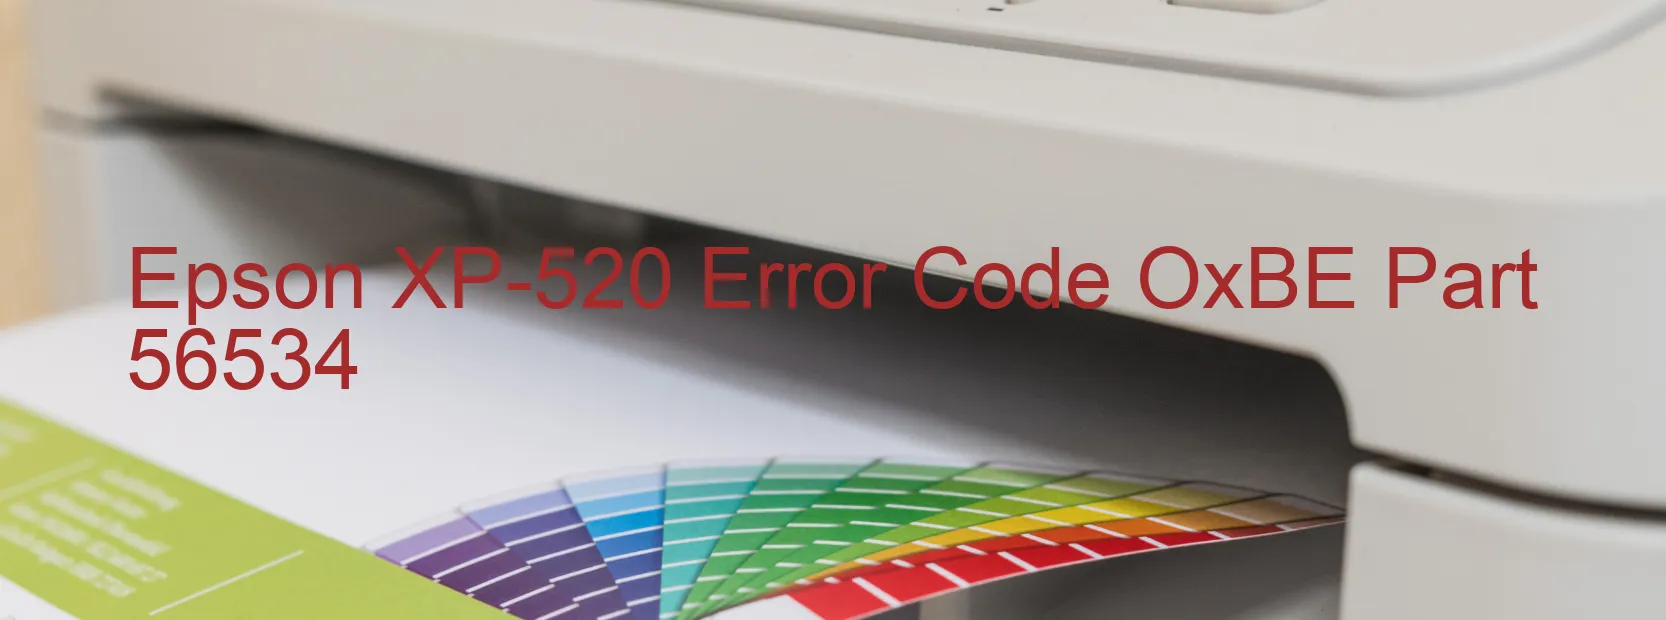 Epson XP-520 Error Code OxBE Part 56534